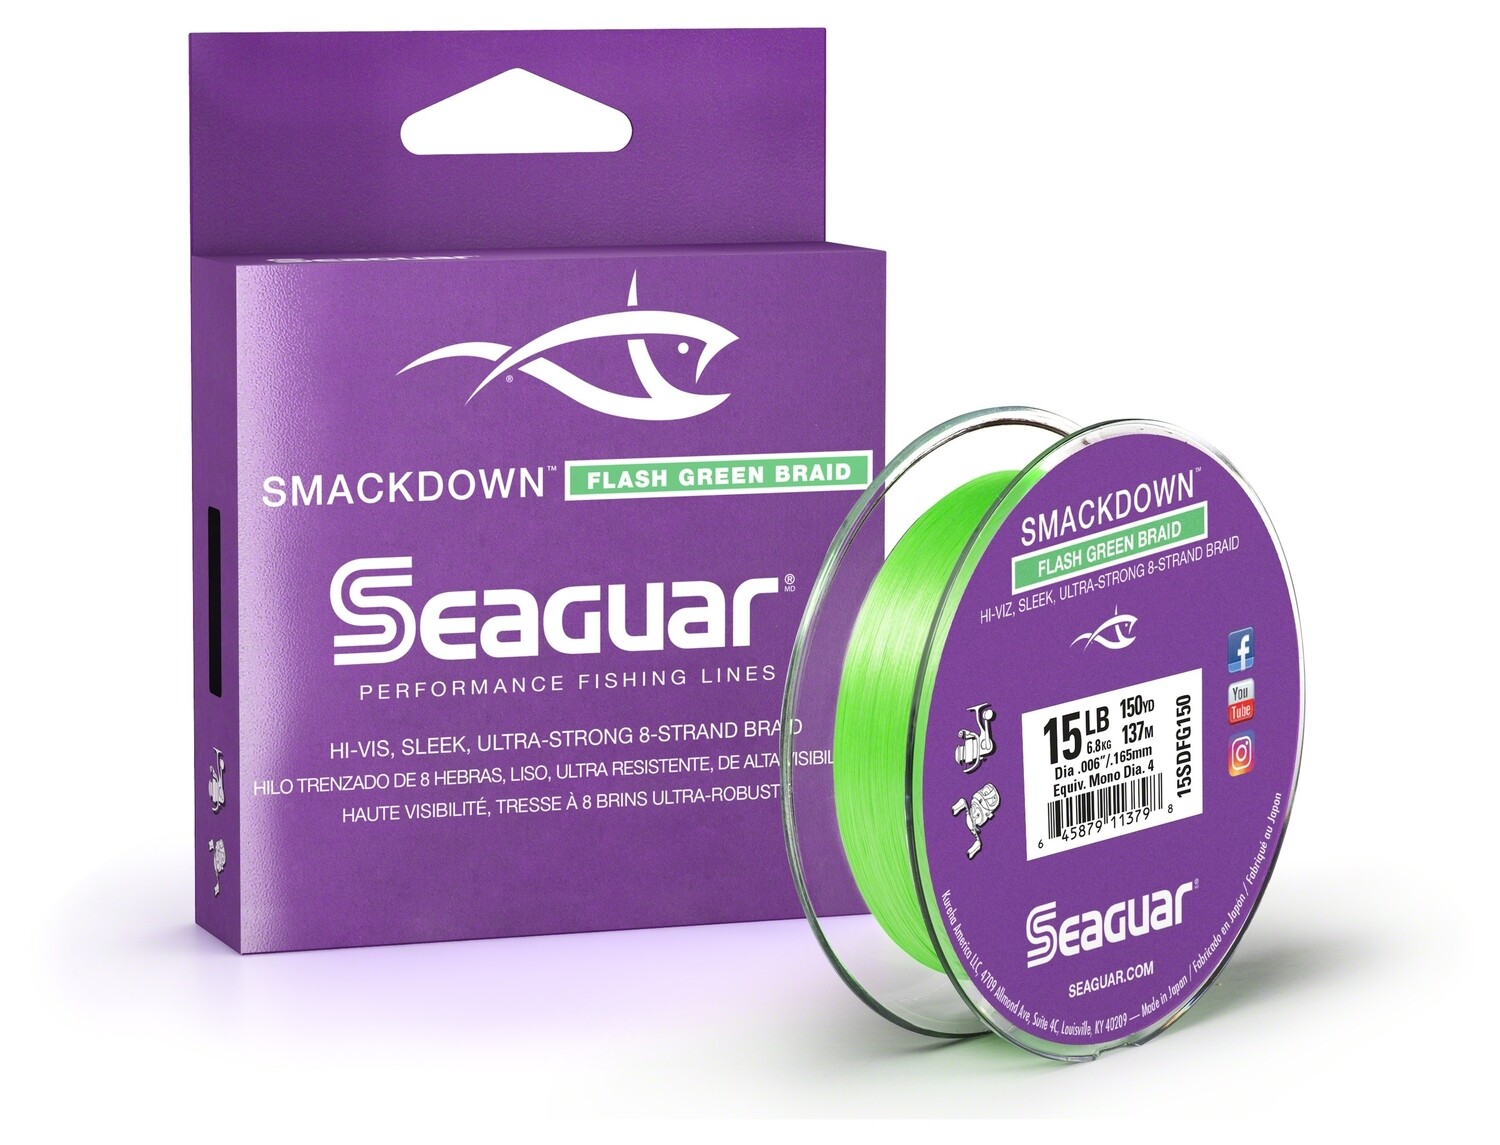 Seaguar 15SDFG150 Smackdown Braided Line Flash Green 15lb 150yd 